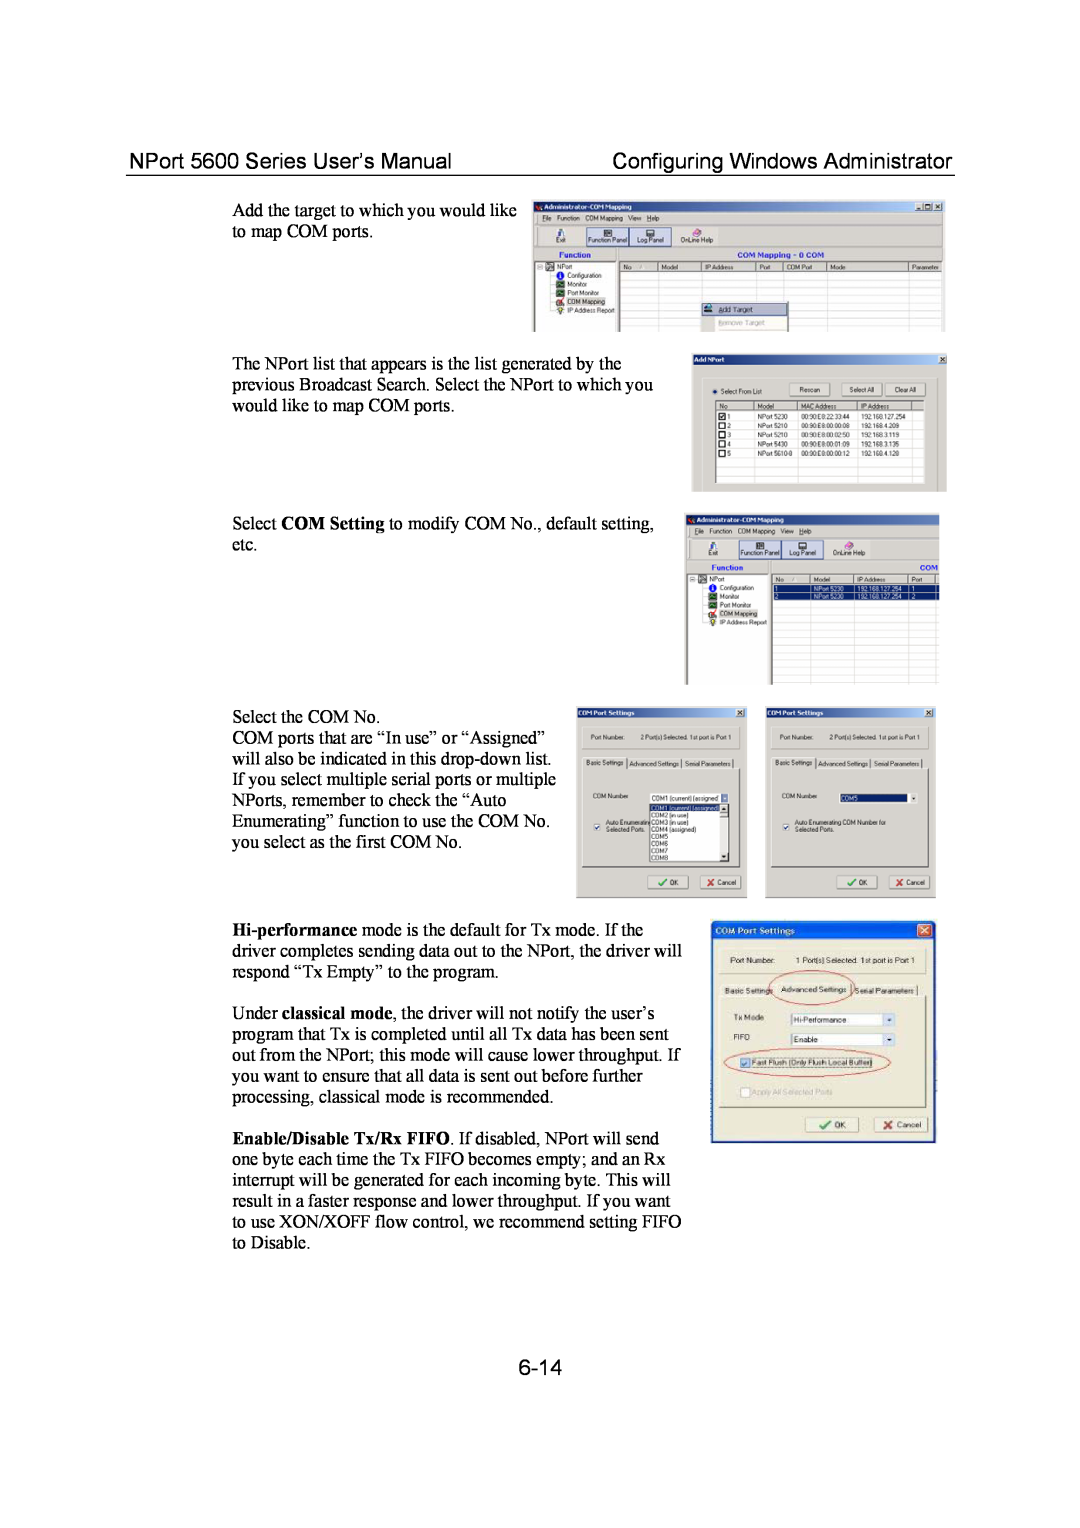 Moxa Technologies user manual 6-14, NPort 5600 Series User’s Manual, Configuring Windows Administrator 